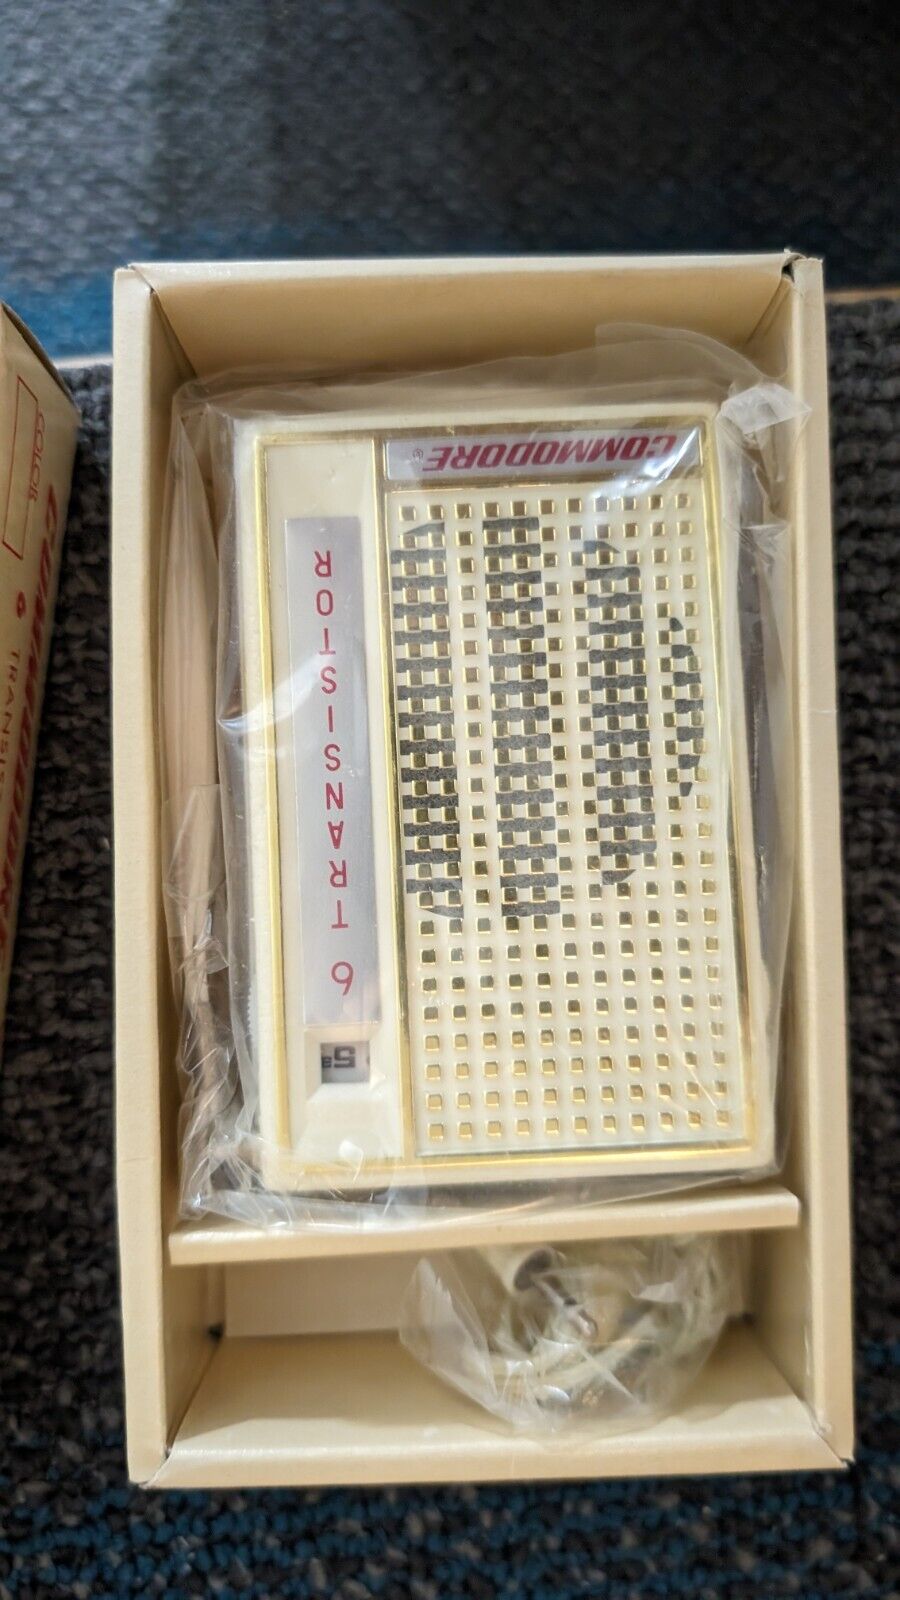 Vintage New Old Stock Commodore 6 Model TW-60 Transistor Radio in Original Box